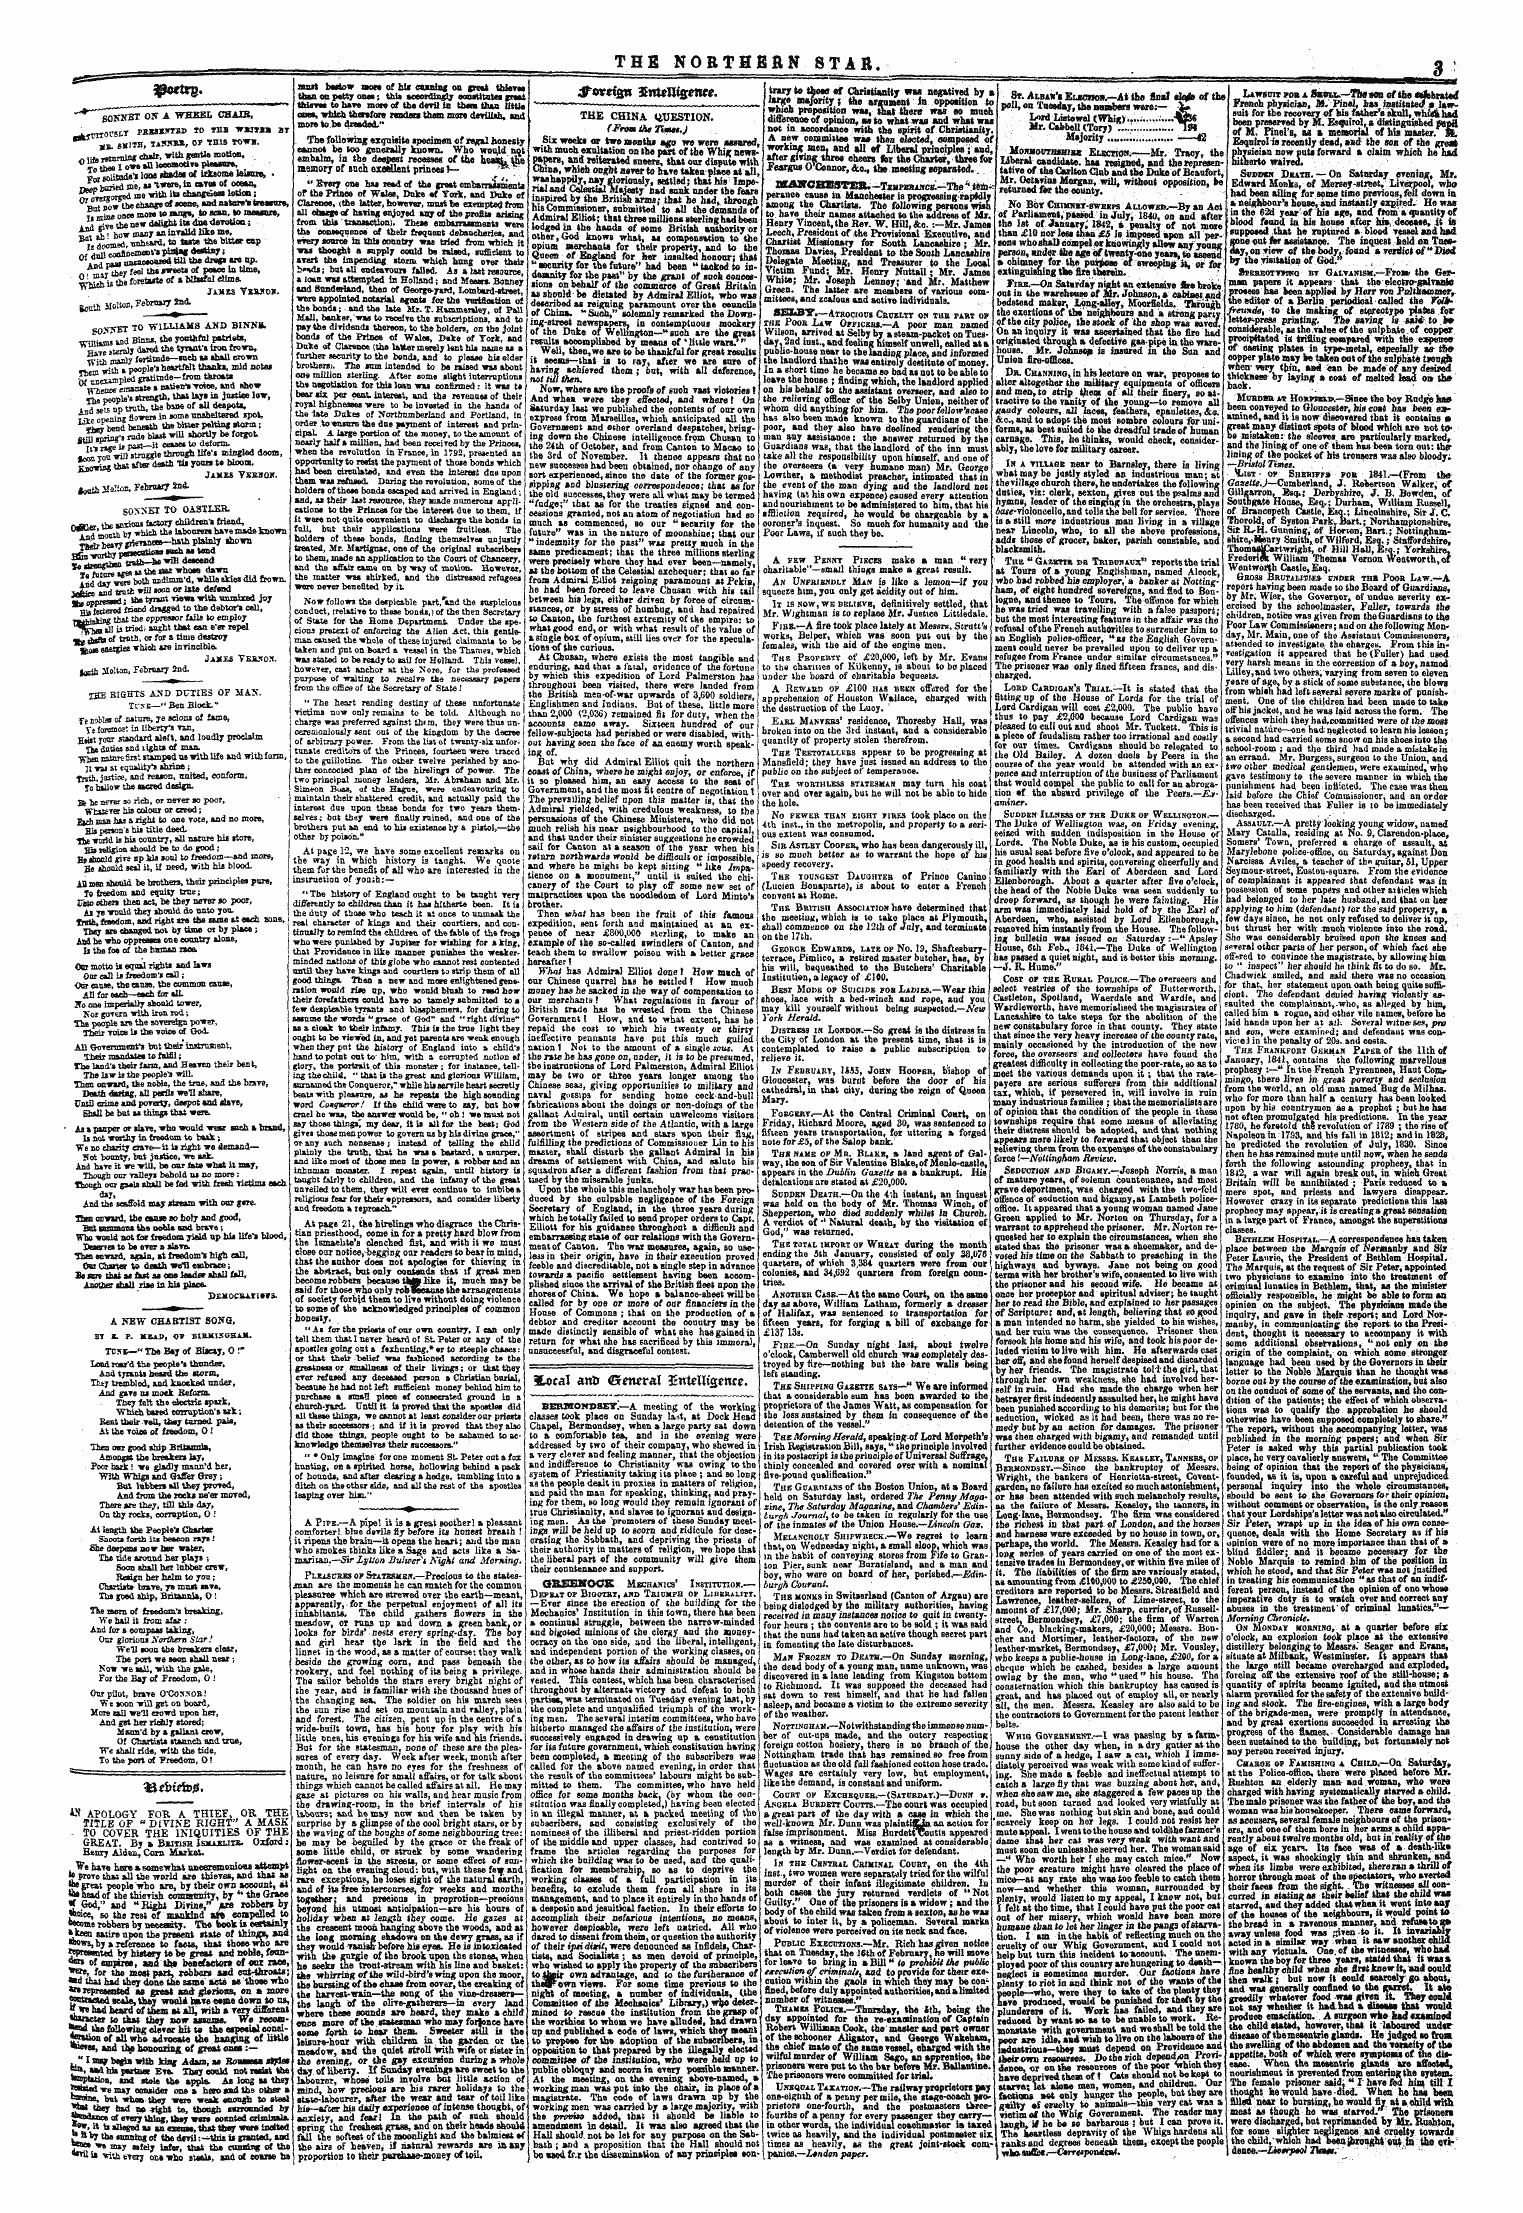 Northern Star (1837-1852): jS F Y, 4th edition - Asortrg